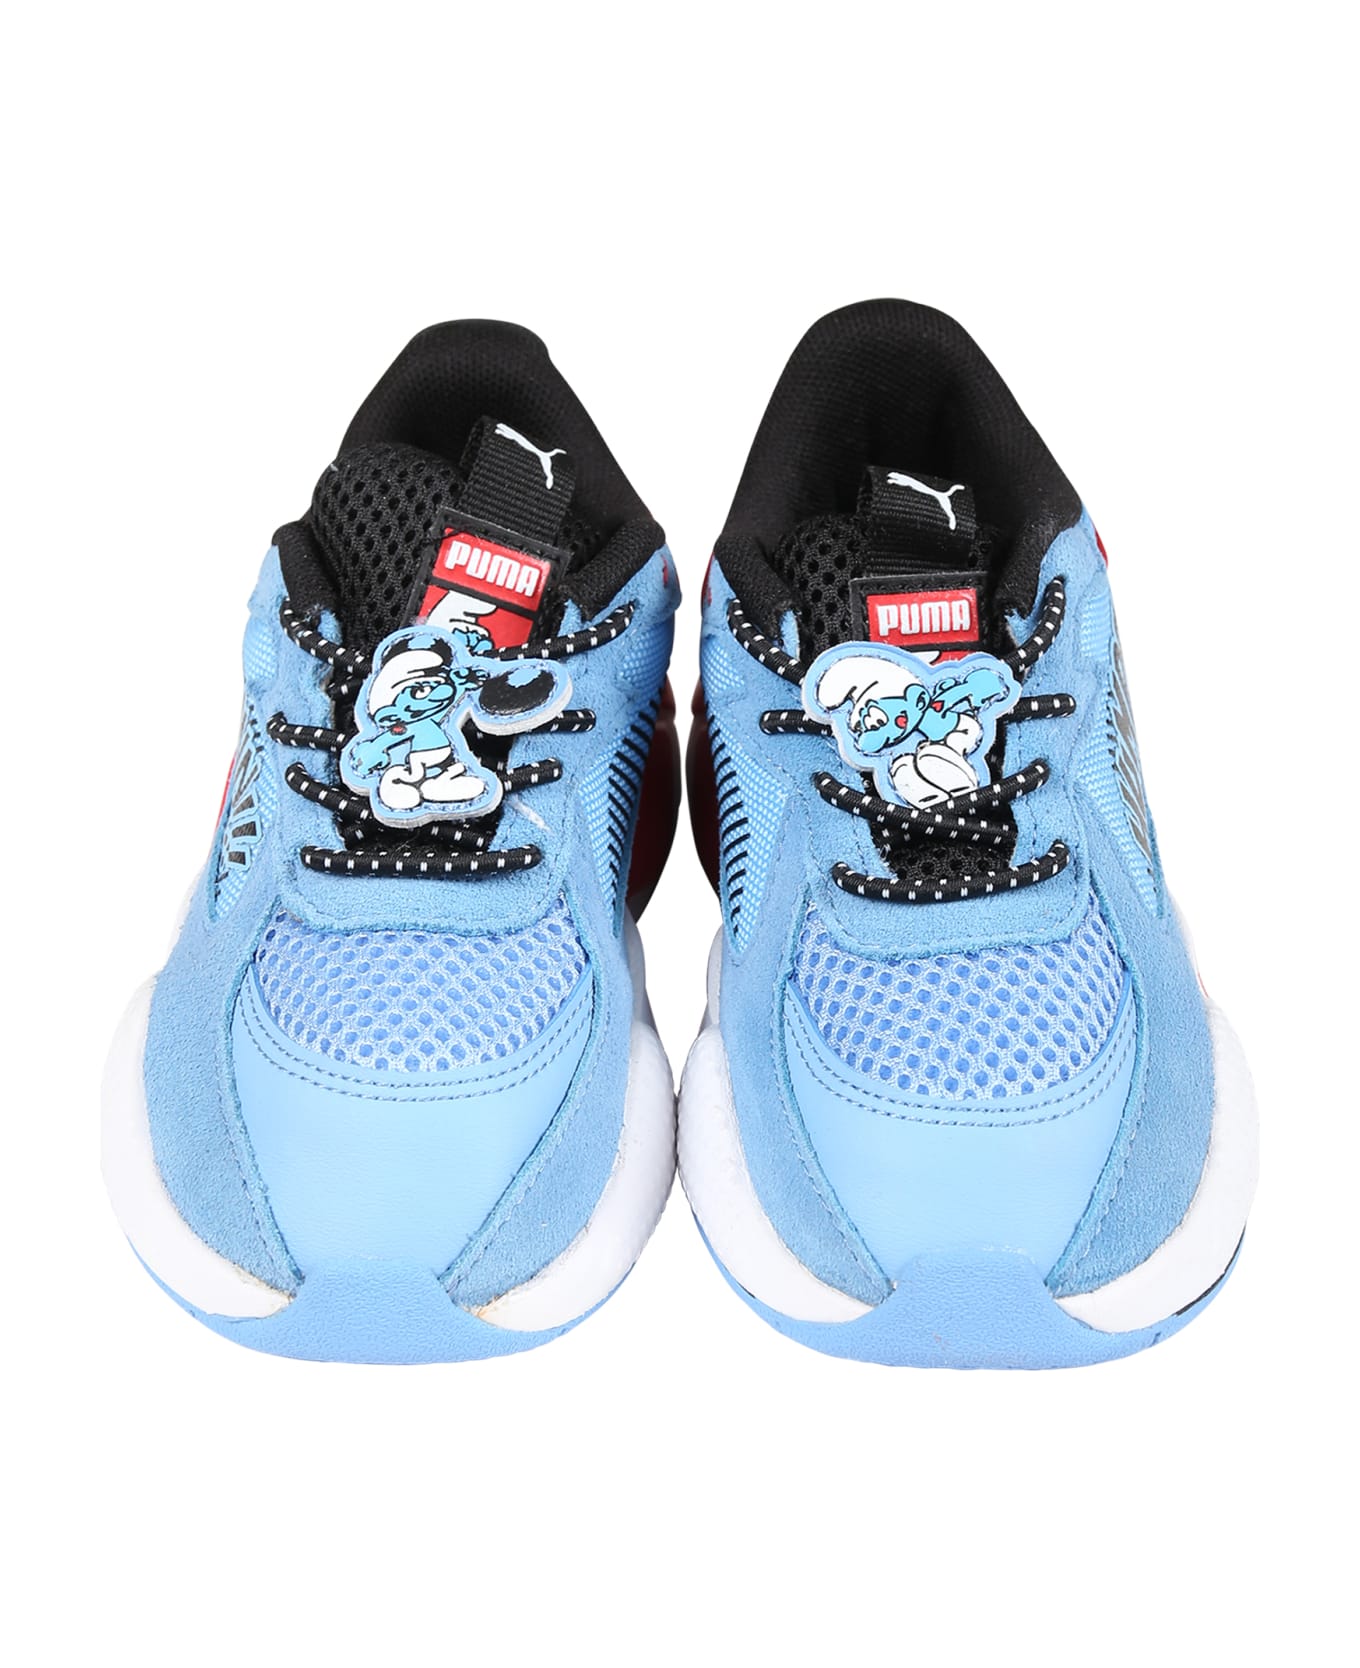 Puma Light Blue Rs-x The Smurfs Ps Sneakers For Boy - Light Blue シューズ